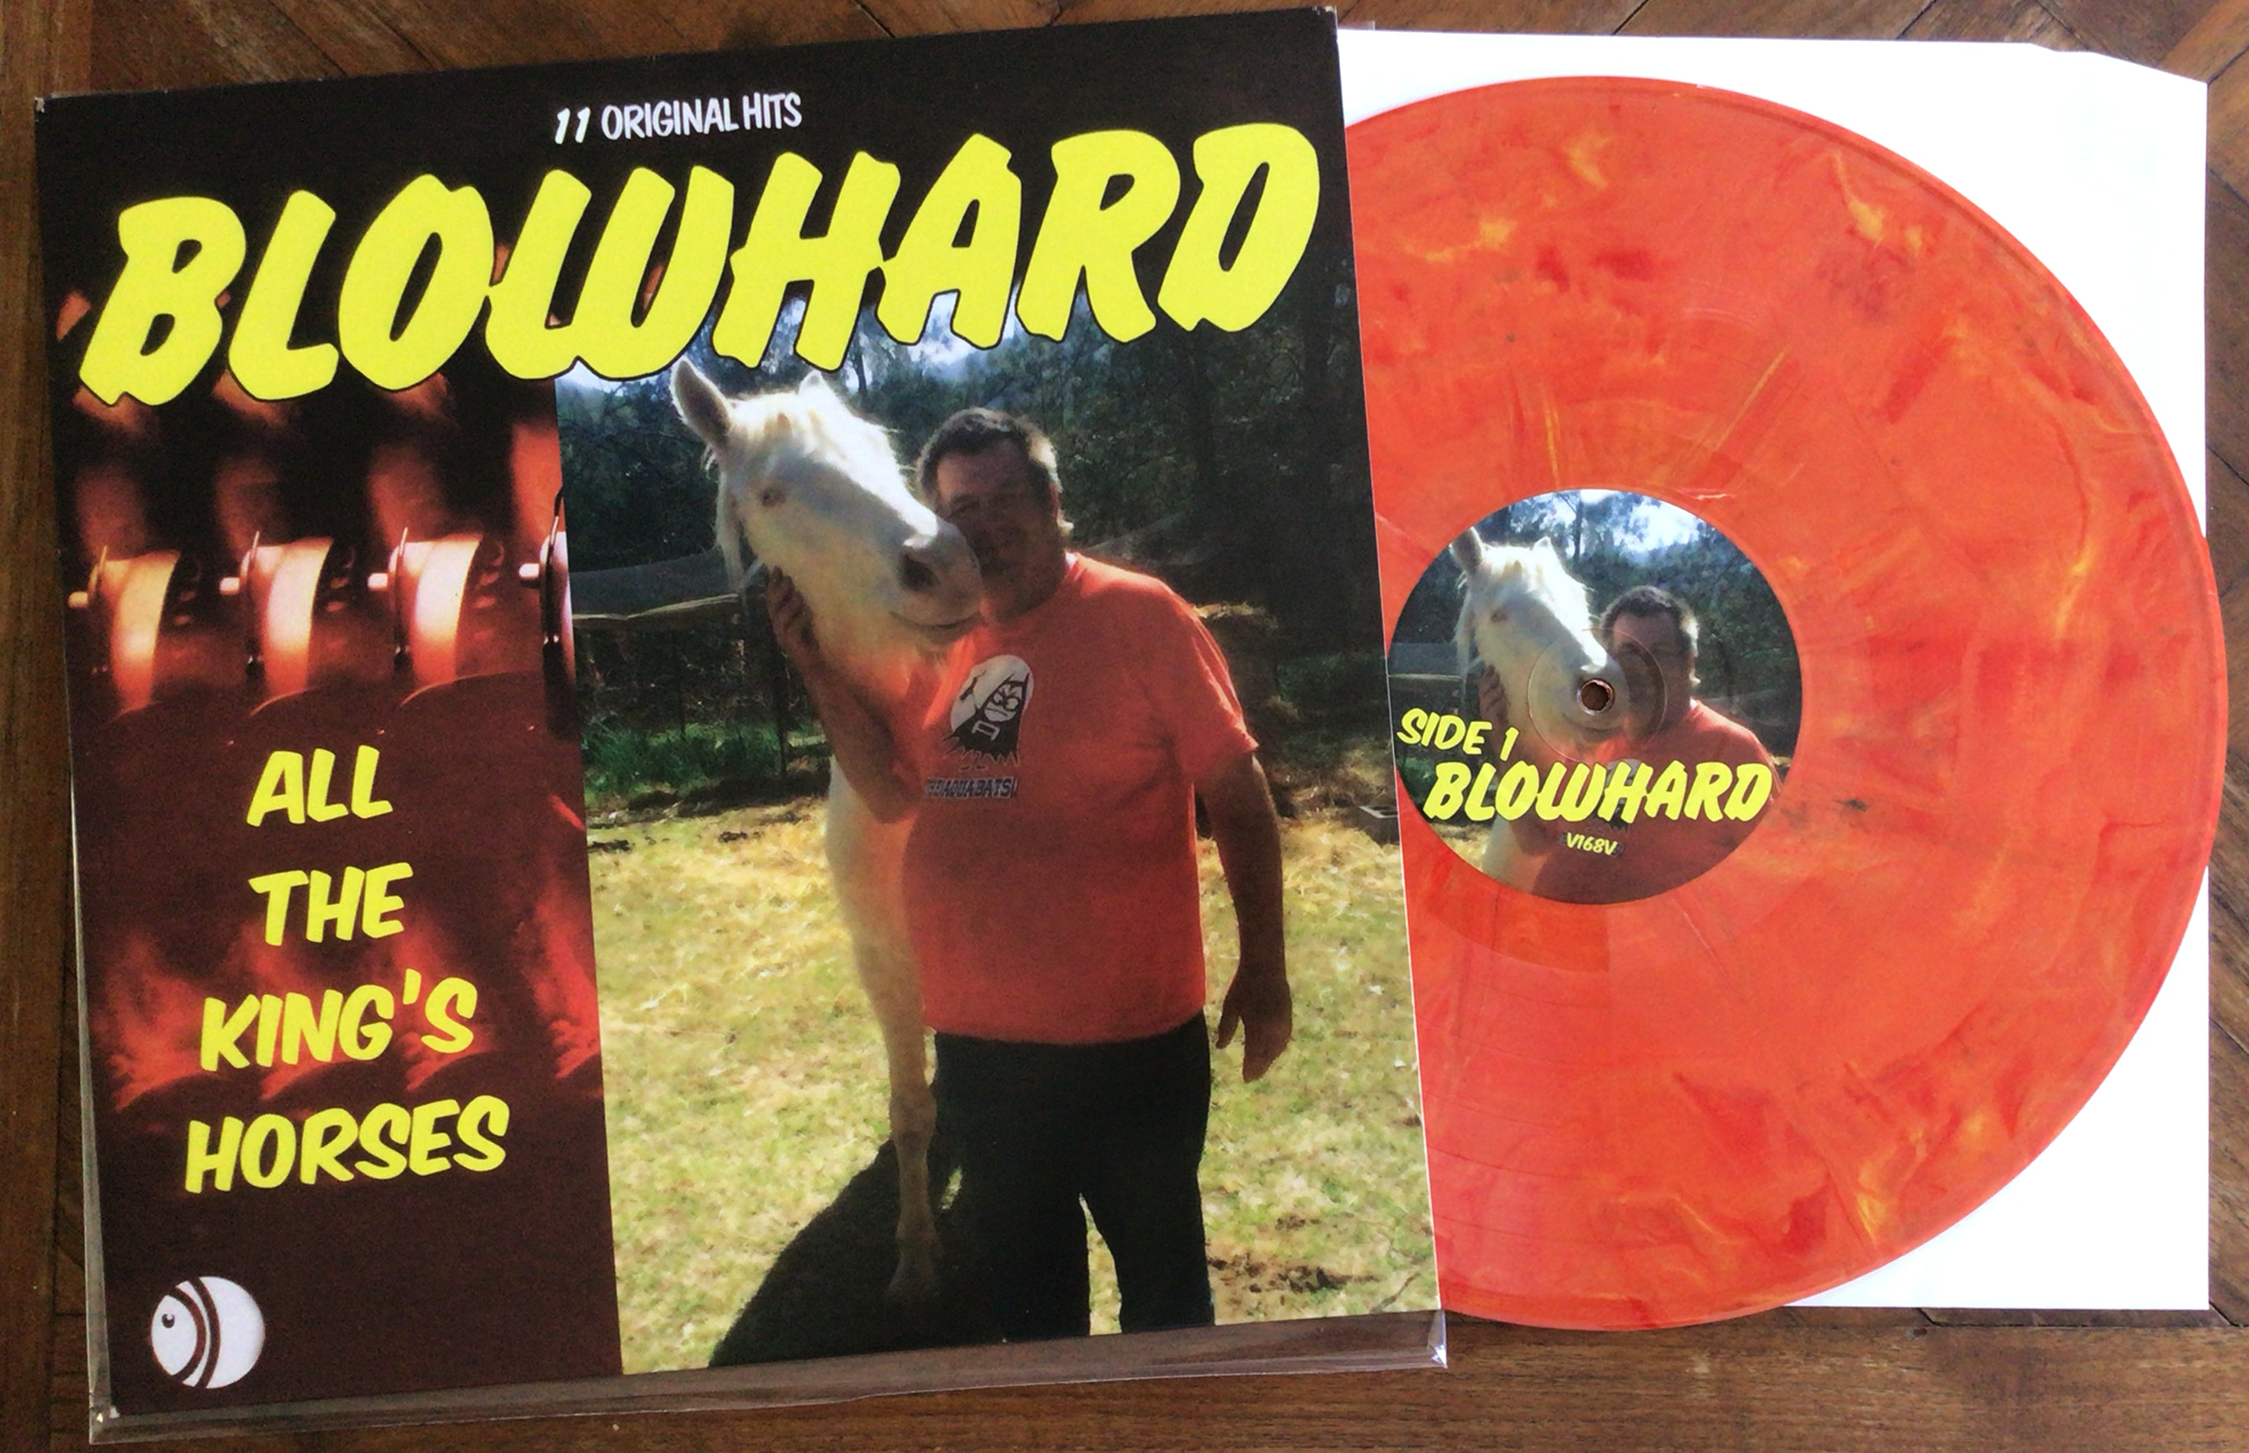 BLOWHARD – All The King's Horses on VINYL (with bonus CD) – Valve Records